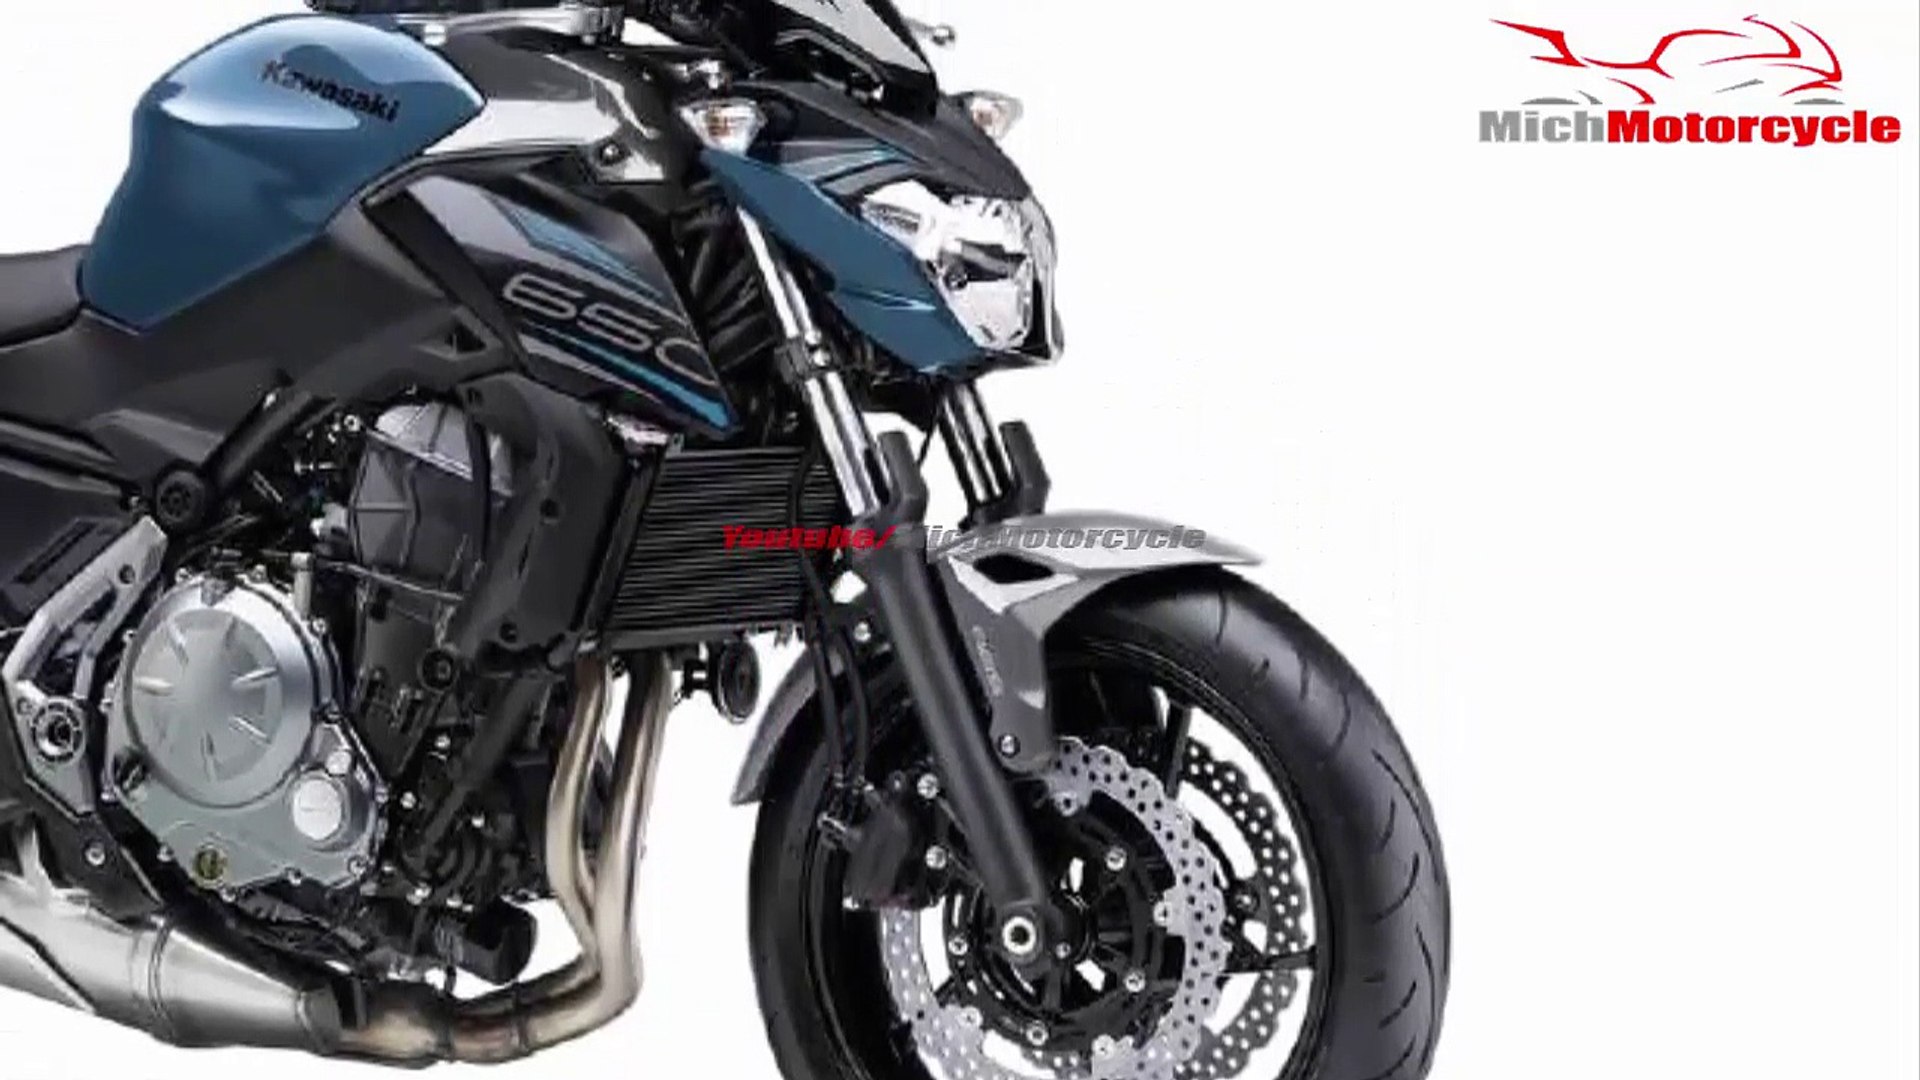 2019 Kawasaki Z650 New Color Storm Cloud Blue Launched | Kawasaki Z650  Version 2019| Mich Motorcycle - Dailymotion Video